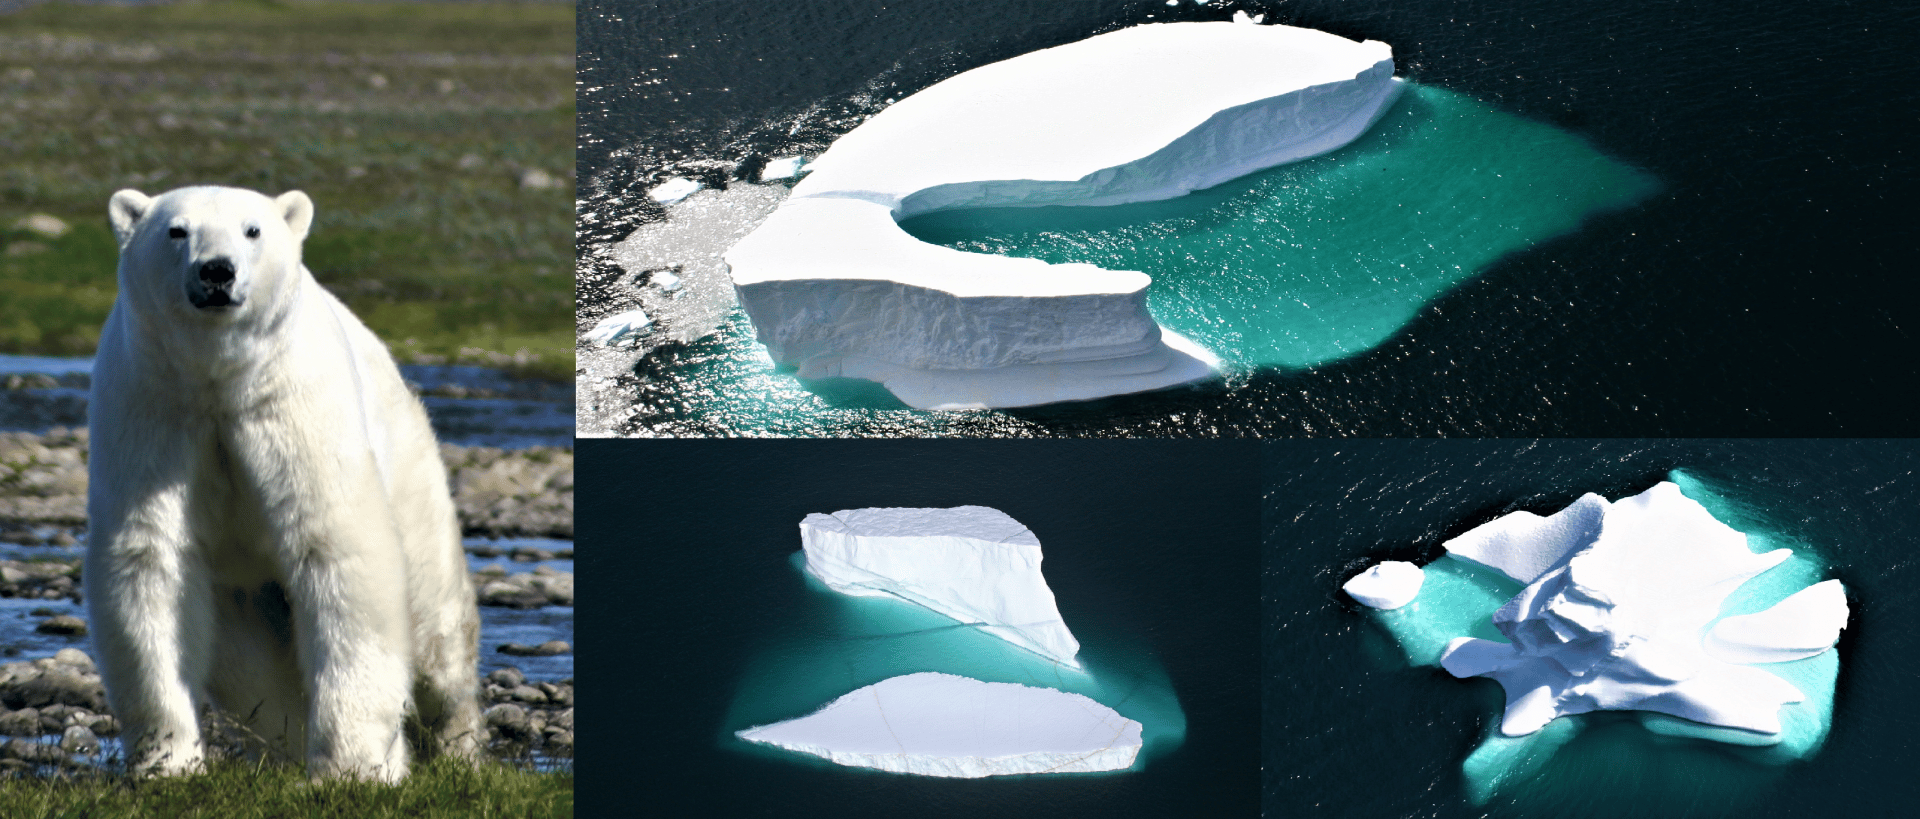 Polar Bears and Icebergs of Labrador Photo Safari